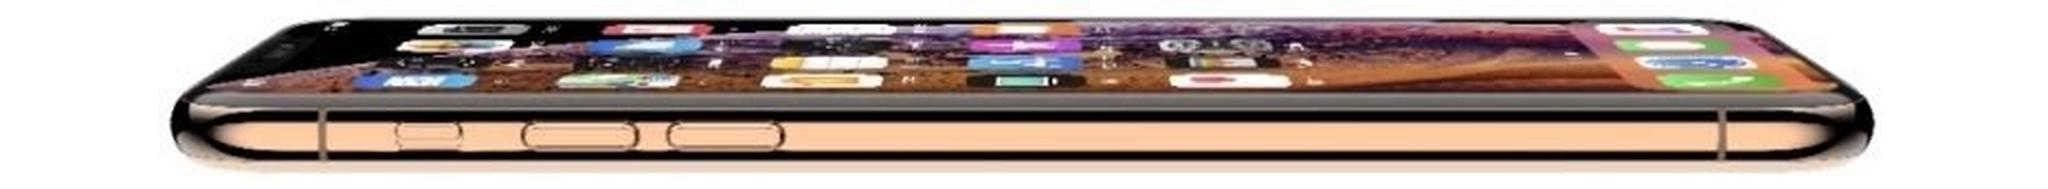 Belkin ScreenForce InvisiGlass Ultra Screen Protection for iPhone XS Max (F8W899EC)